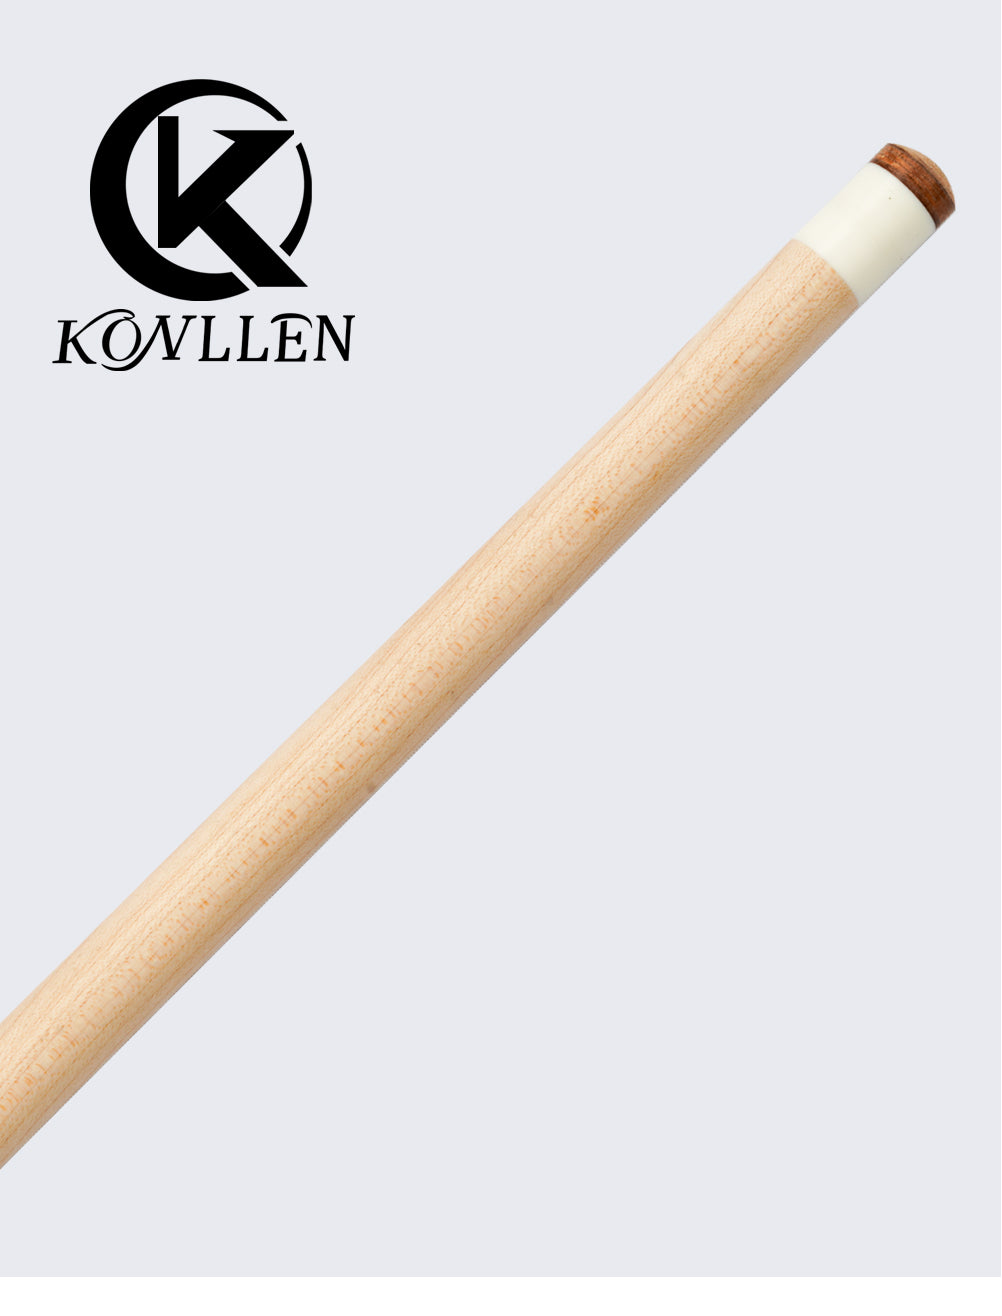 KONLLEN Solid Maple Wood Technology Shaft Billiard Pool Cue Kit Shaft 3/8*8 Radial Pin Joint 12.9mm Tip Carbon Fiber Tube Shaft